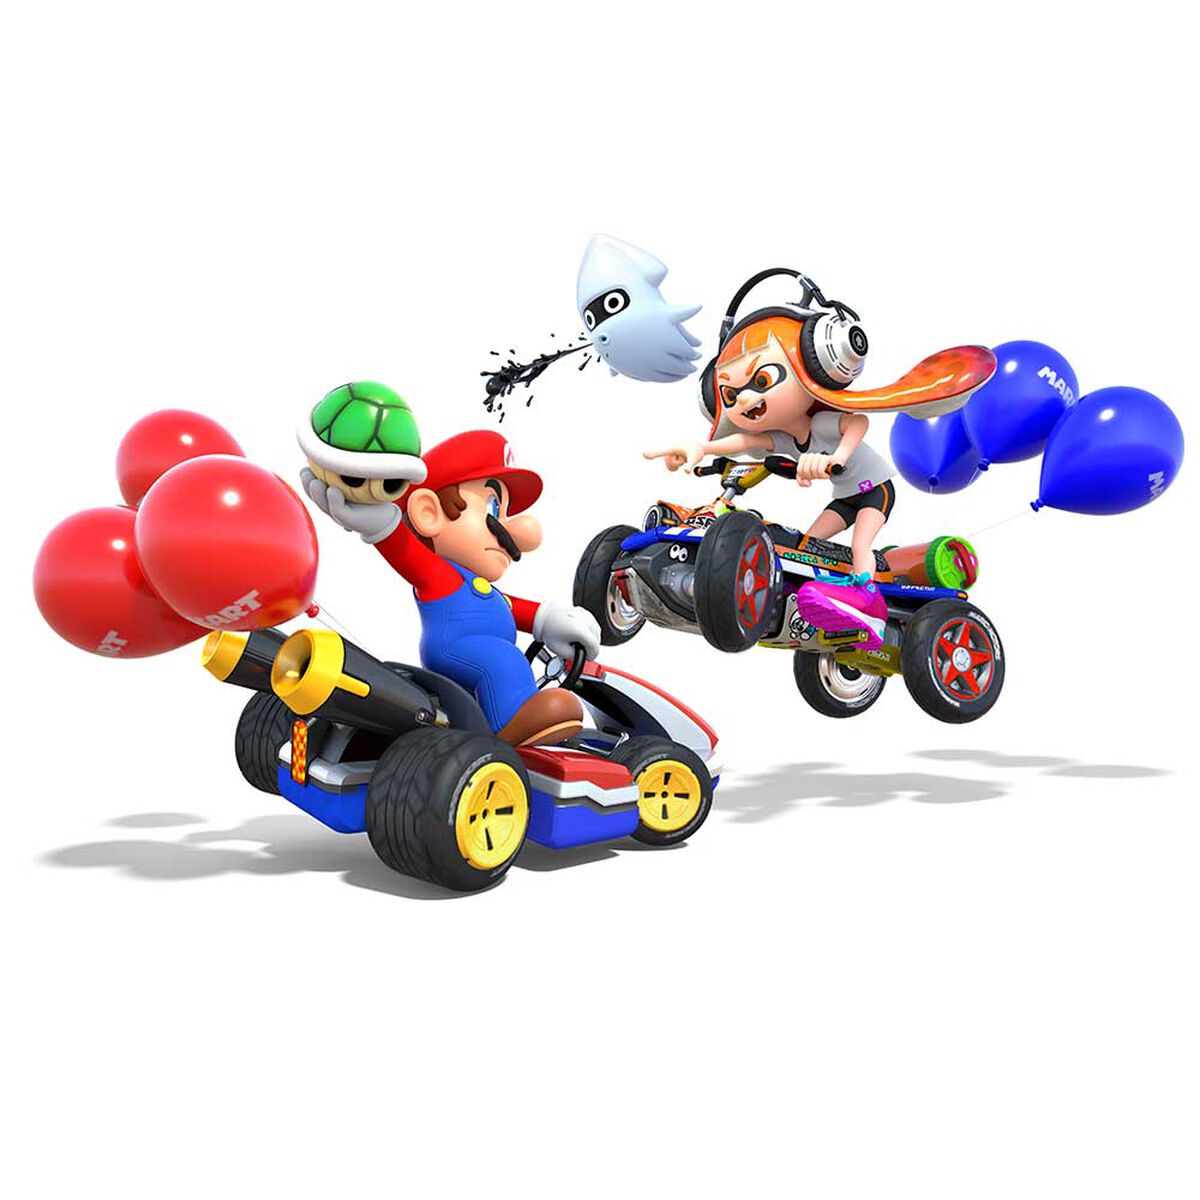 Juego Nintendo Switch Mario Kart 8 Deluxe